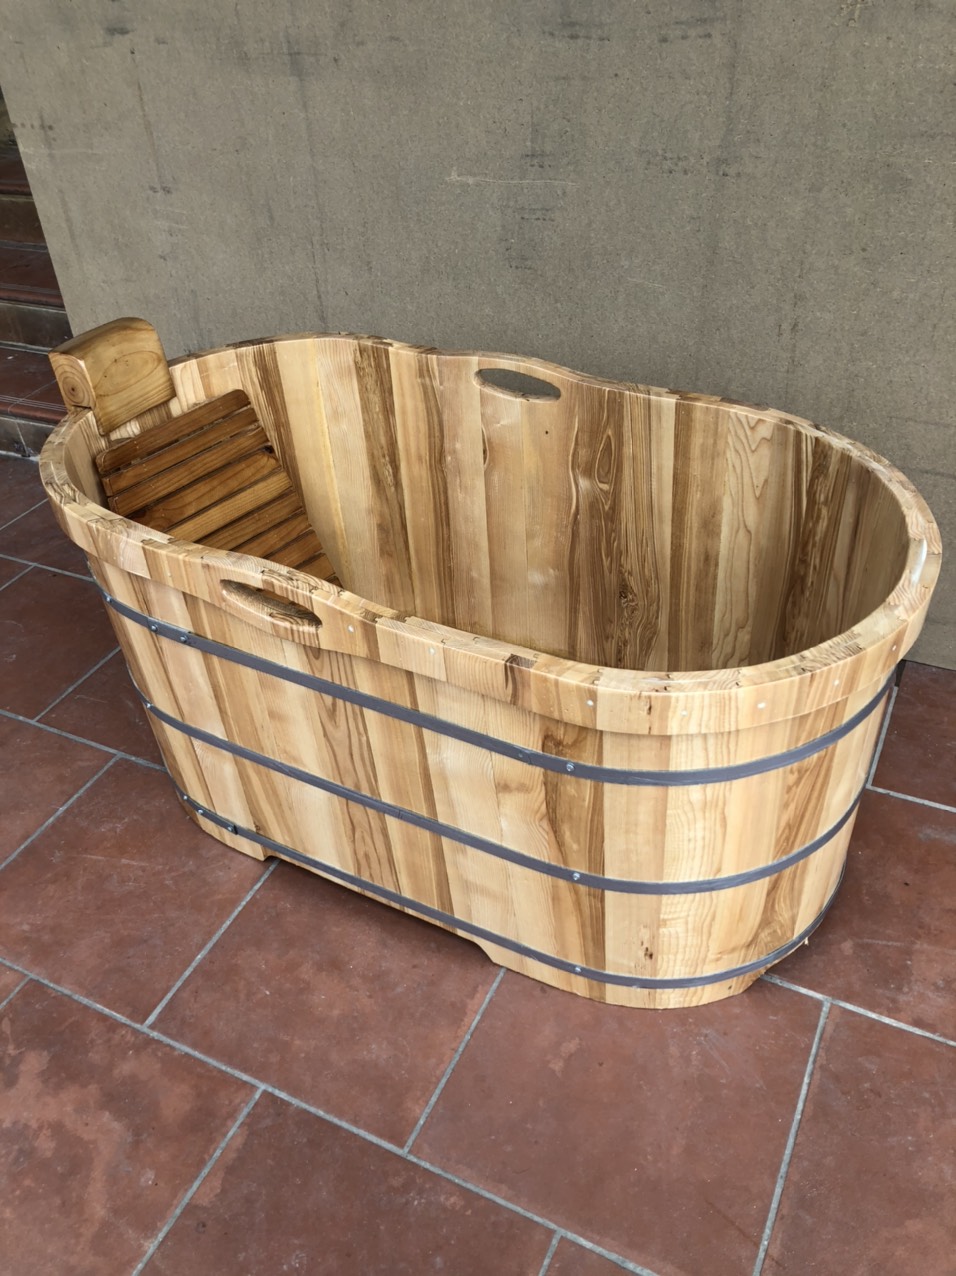 Bồn tắm gỗ tròn